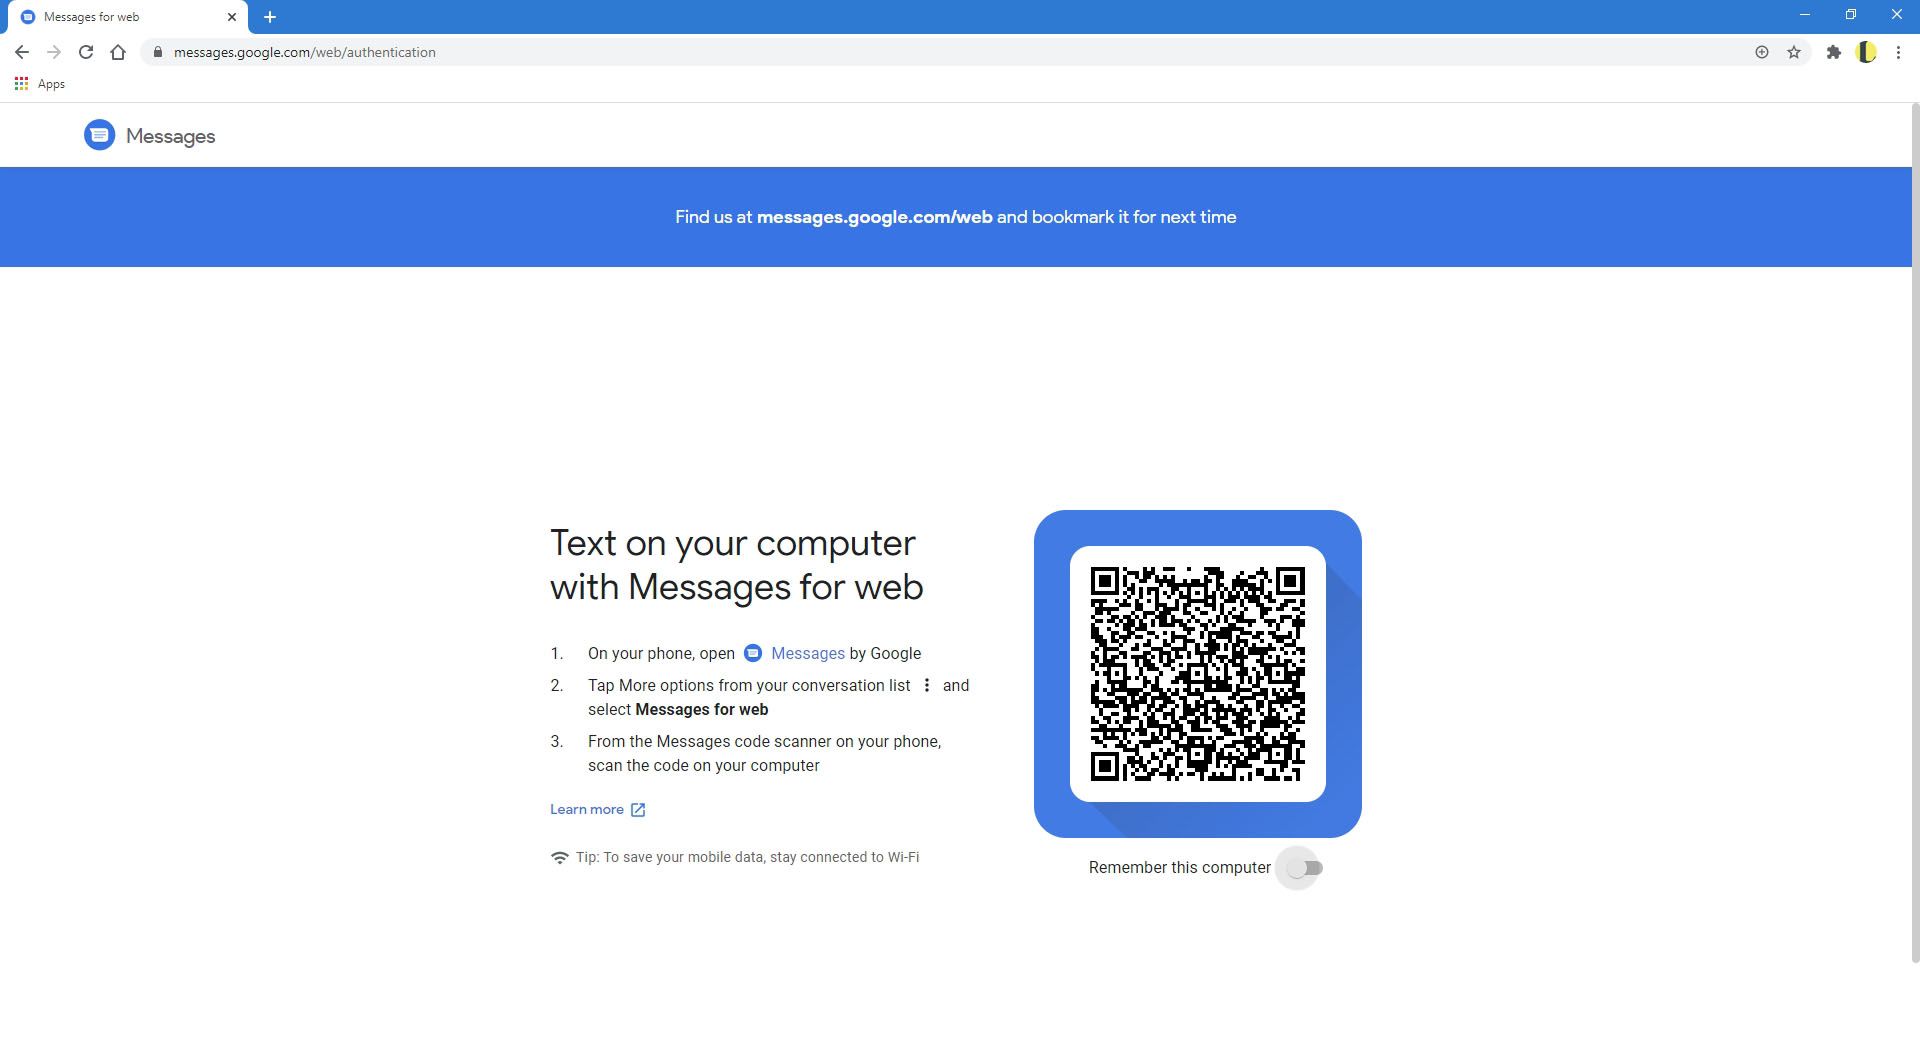 Google Messages webbplats.